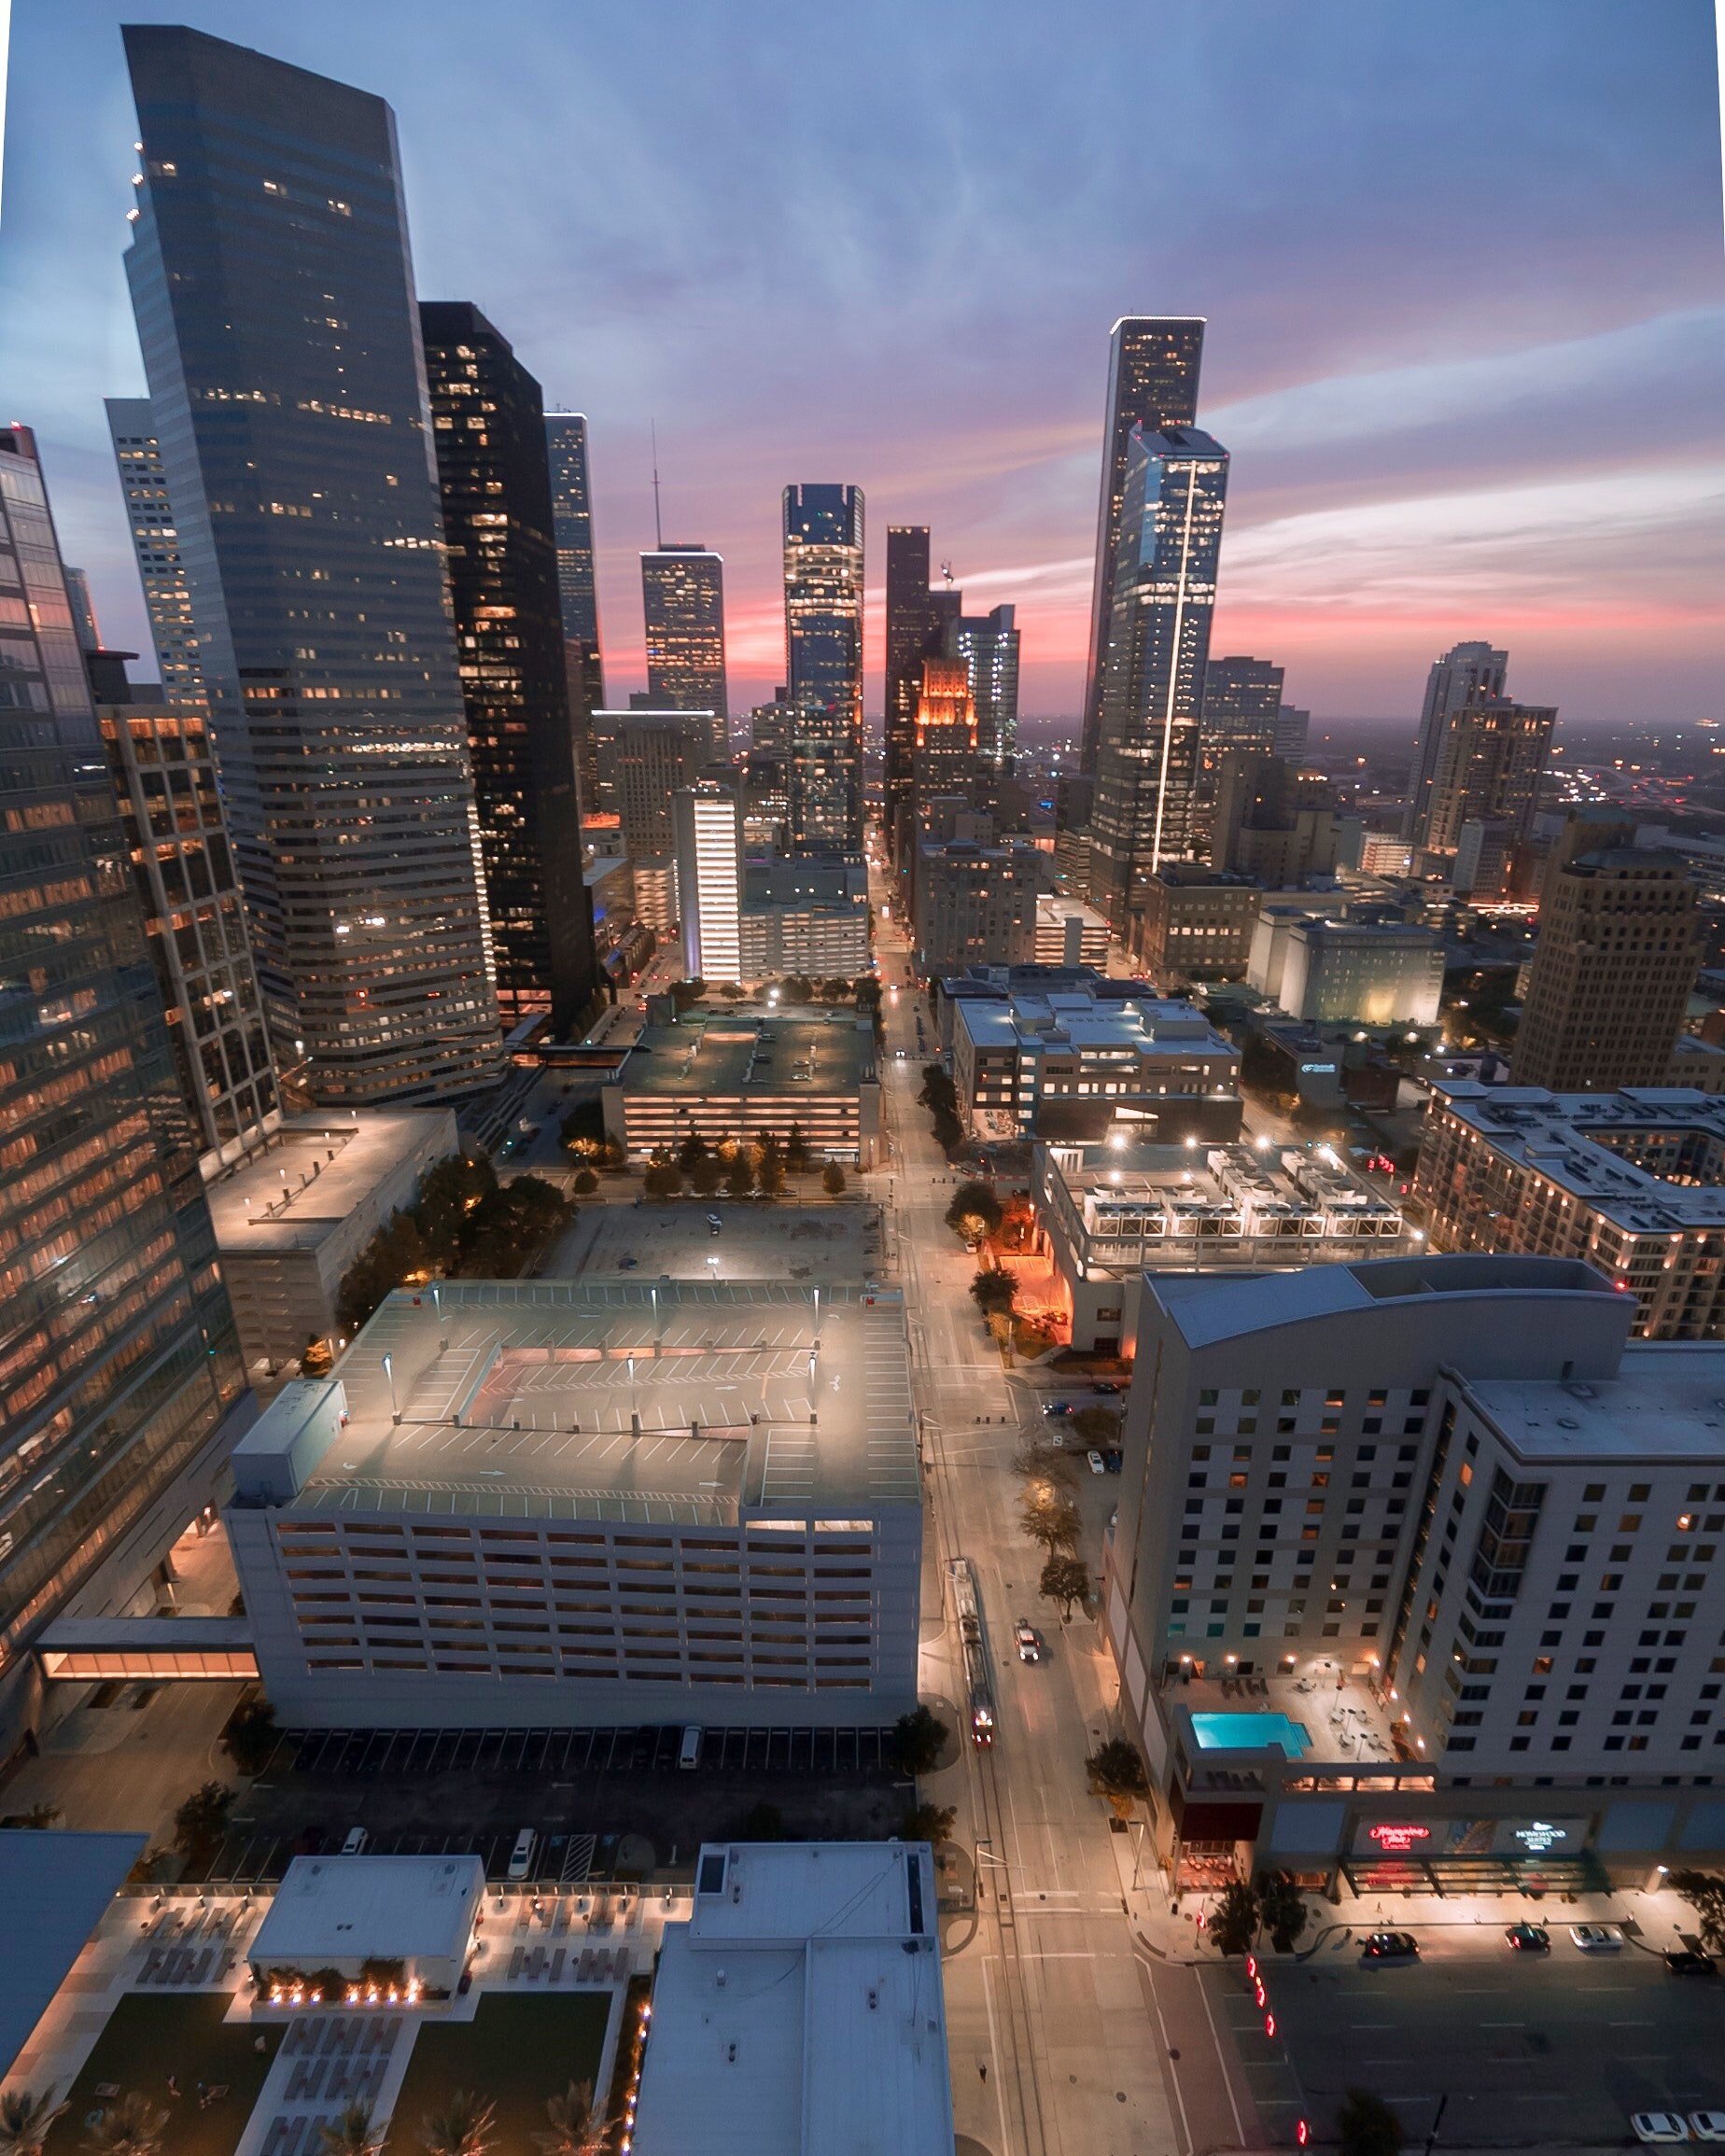 Houston Buildings at night